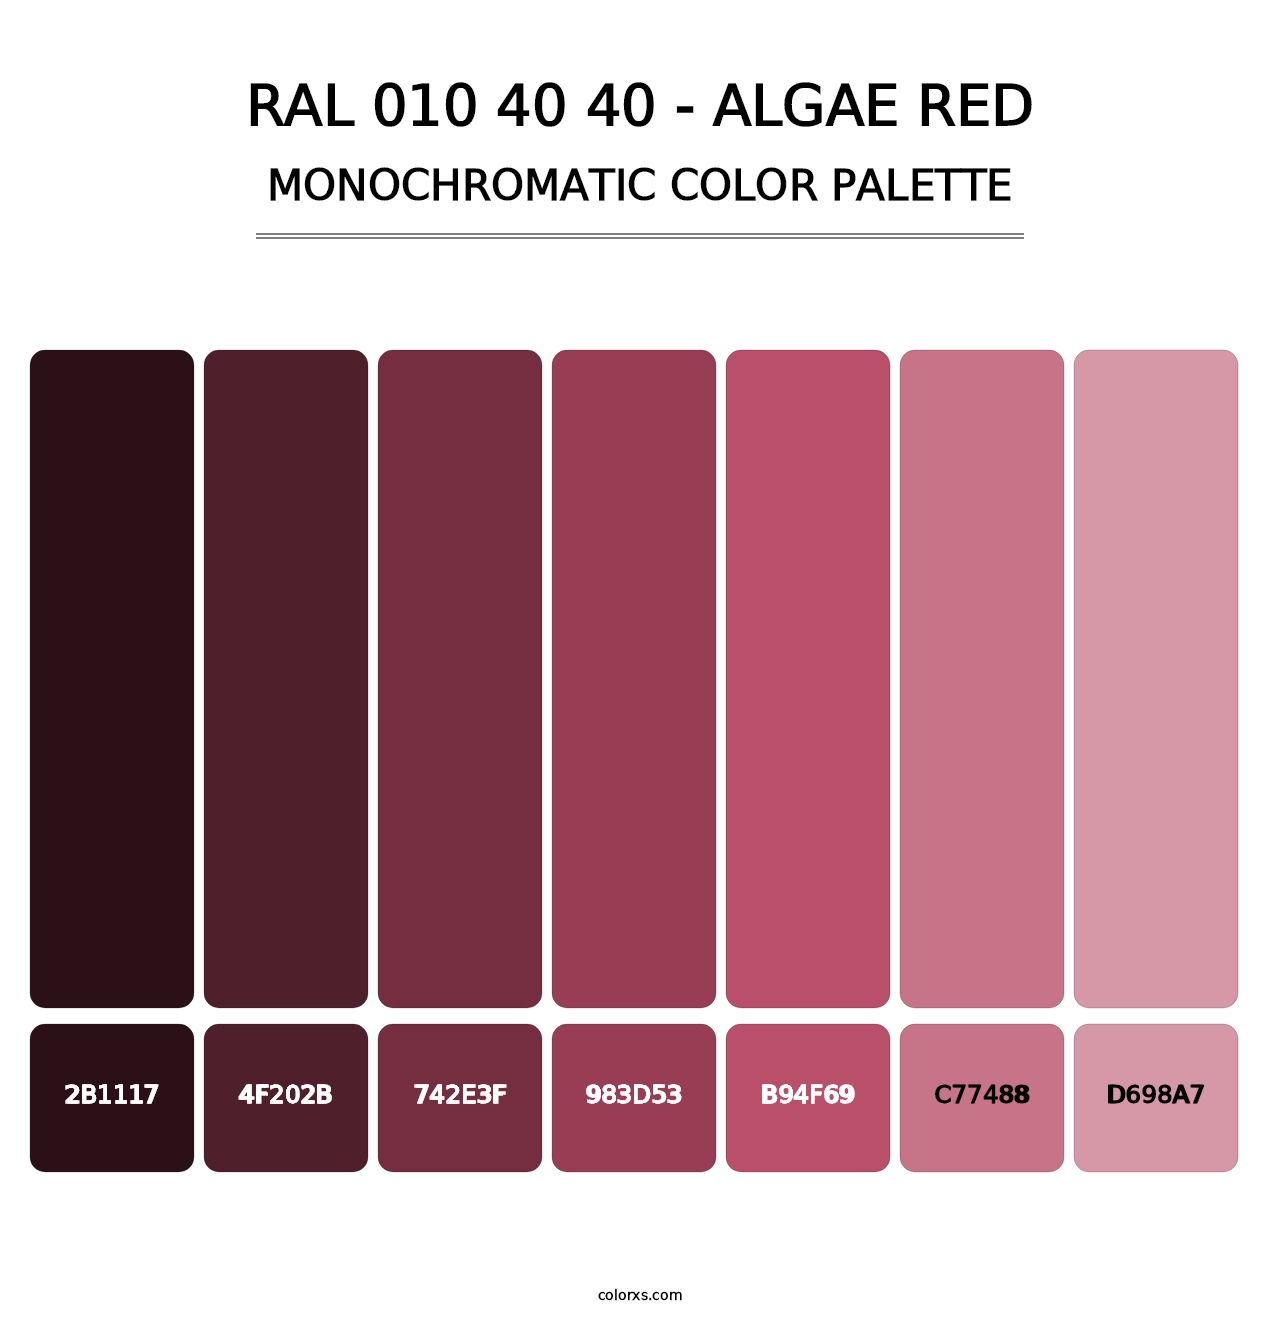 RAL 010 40 40 - Algae Red - Monochromatic Color Palette